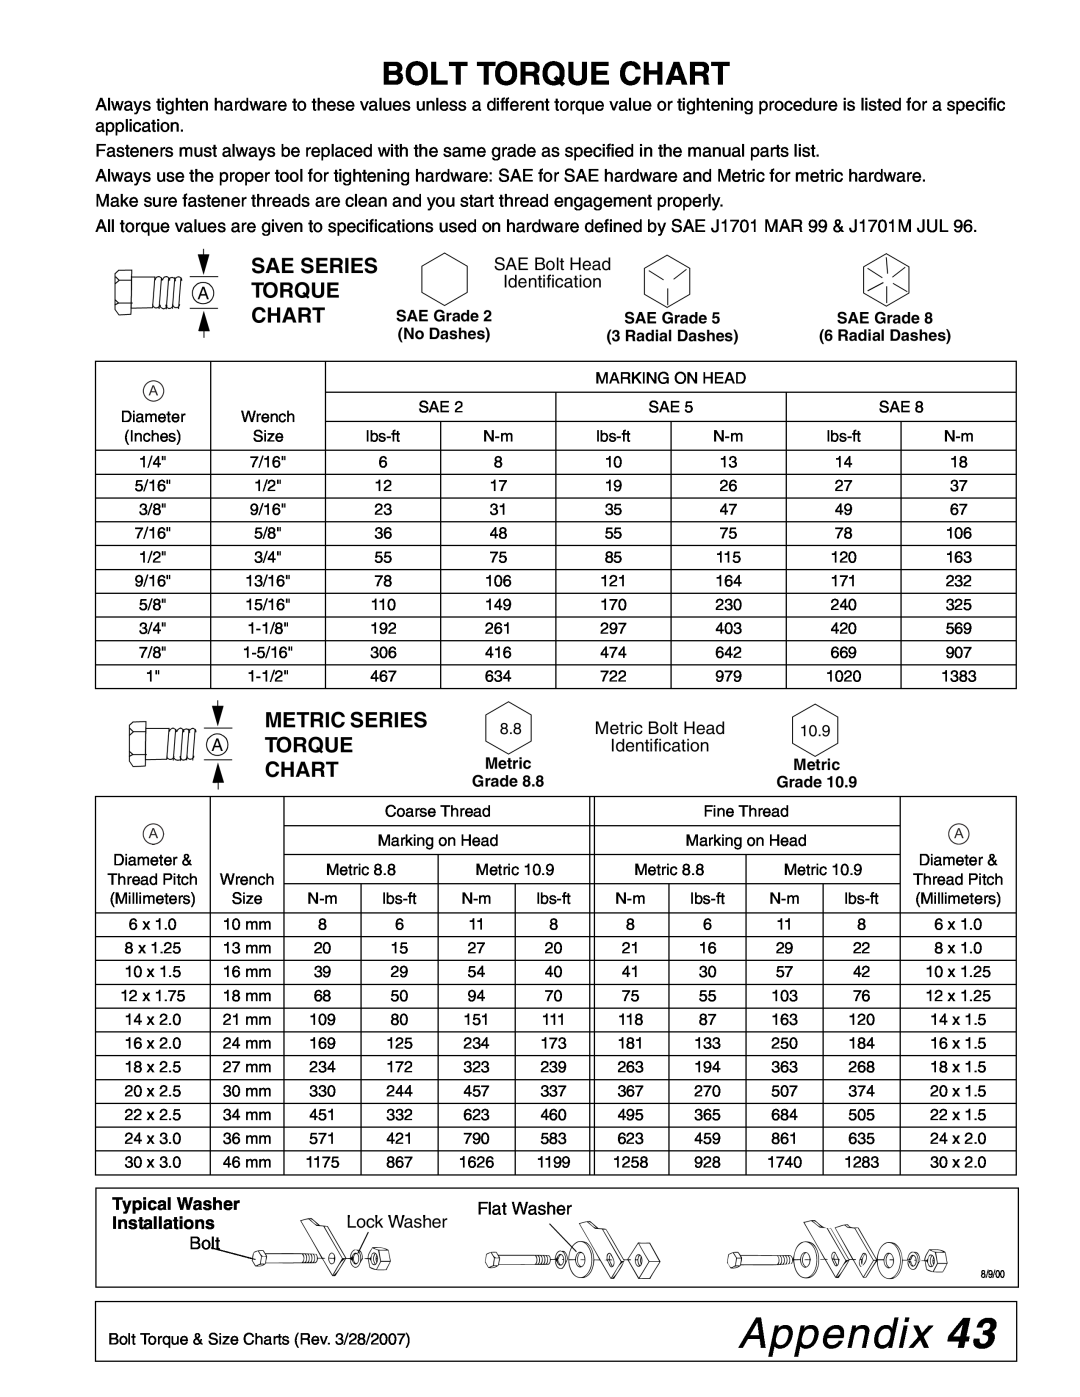 Woods Equipment RD990X manual Appendix, Bolt Torque Chart, Sae Series A Torque Chart, Metric Series A Torque Chart 